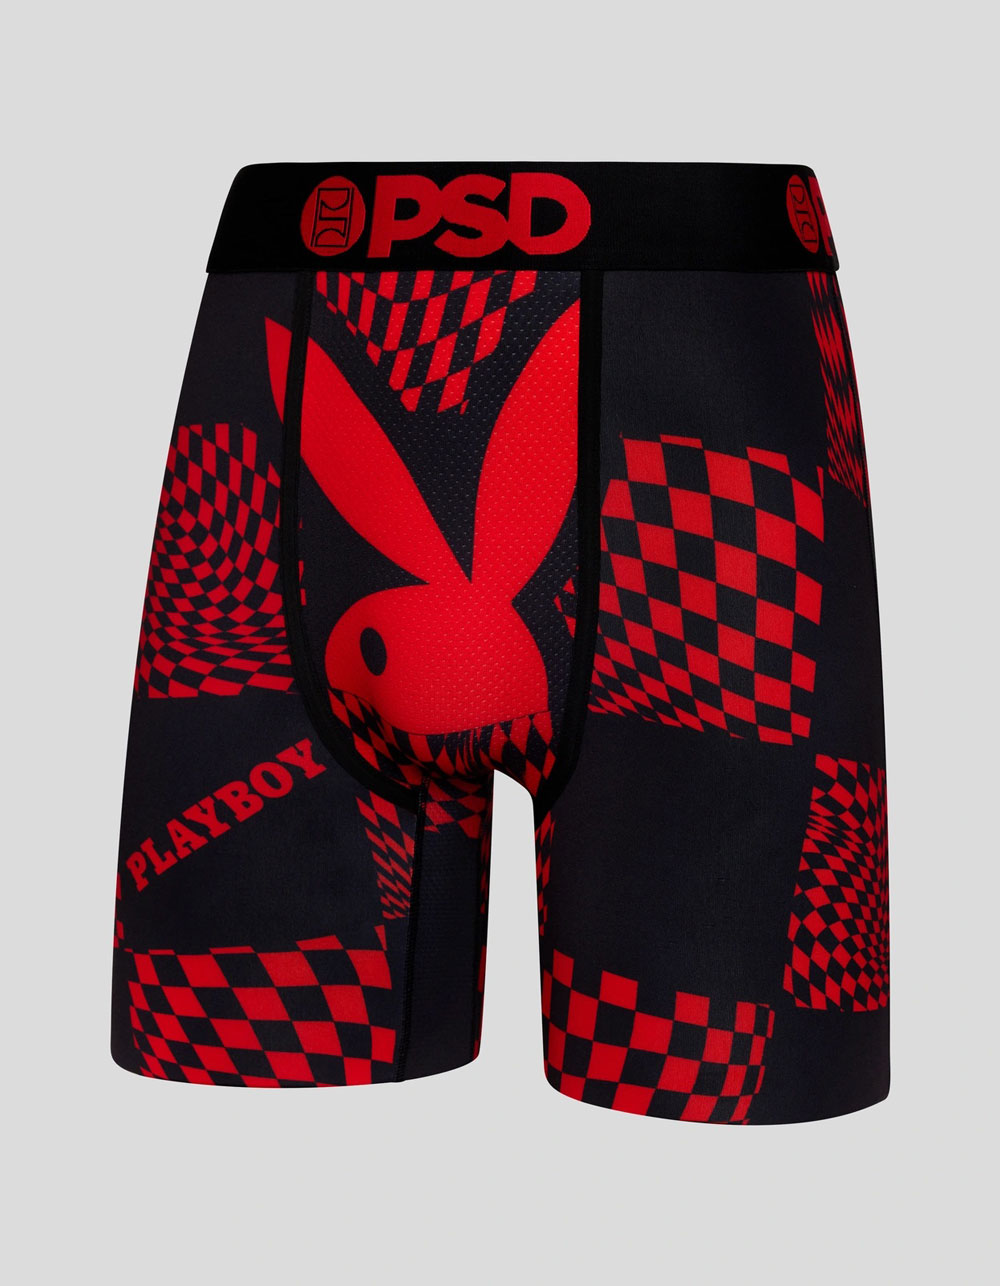 PSD Big Boys' E - Three Roses Boxer Brief Underwear,Medium,Red